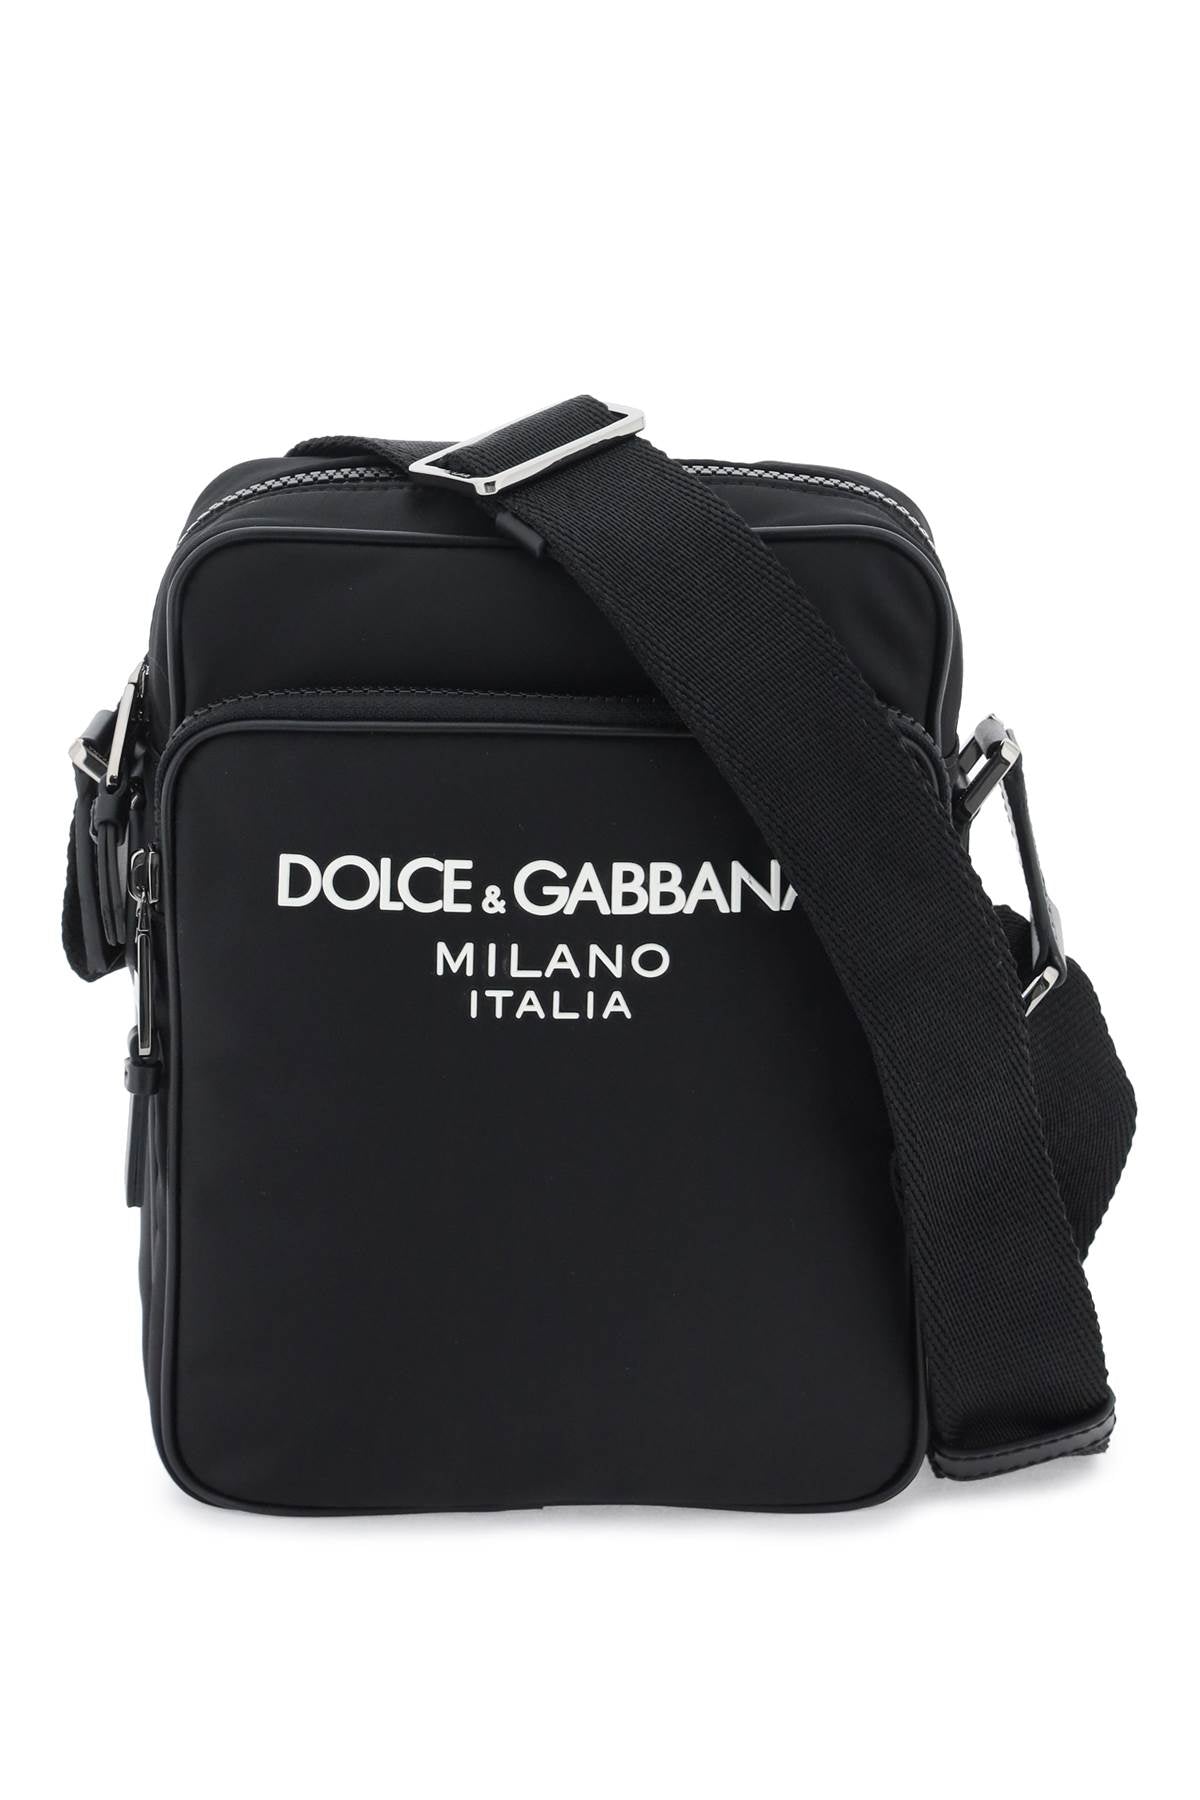 Dolce & gabbana nylon crossbody bag-0